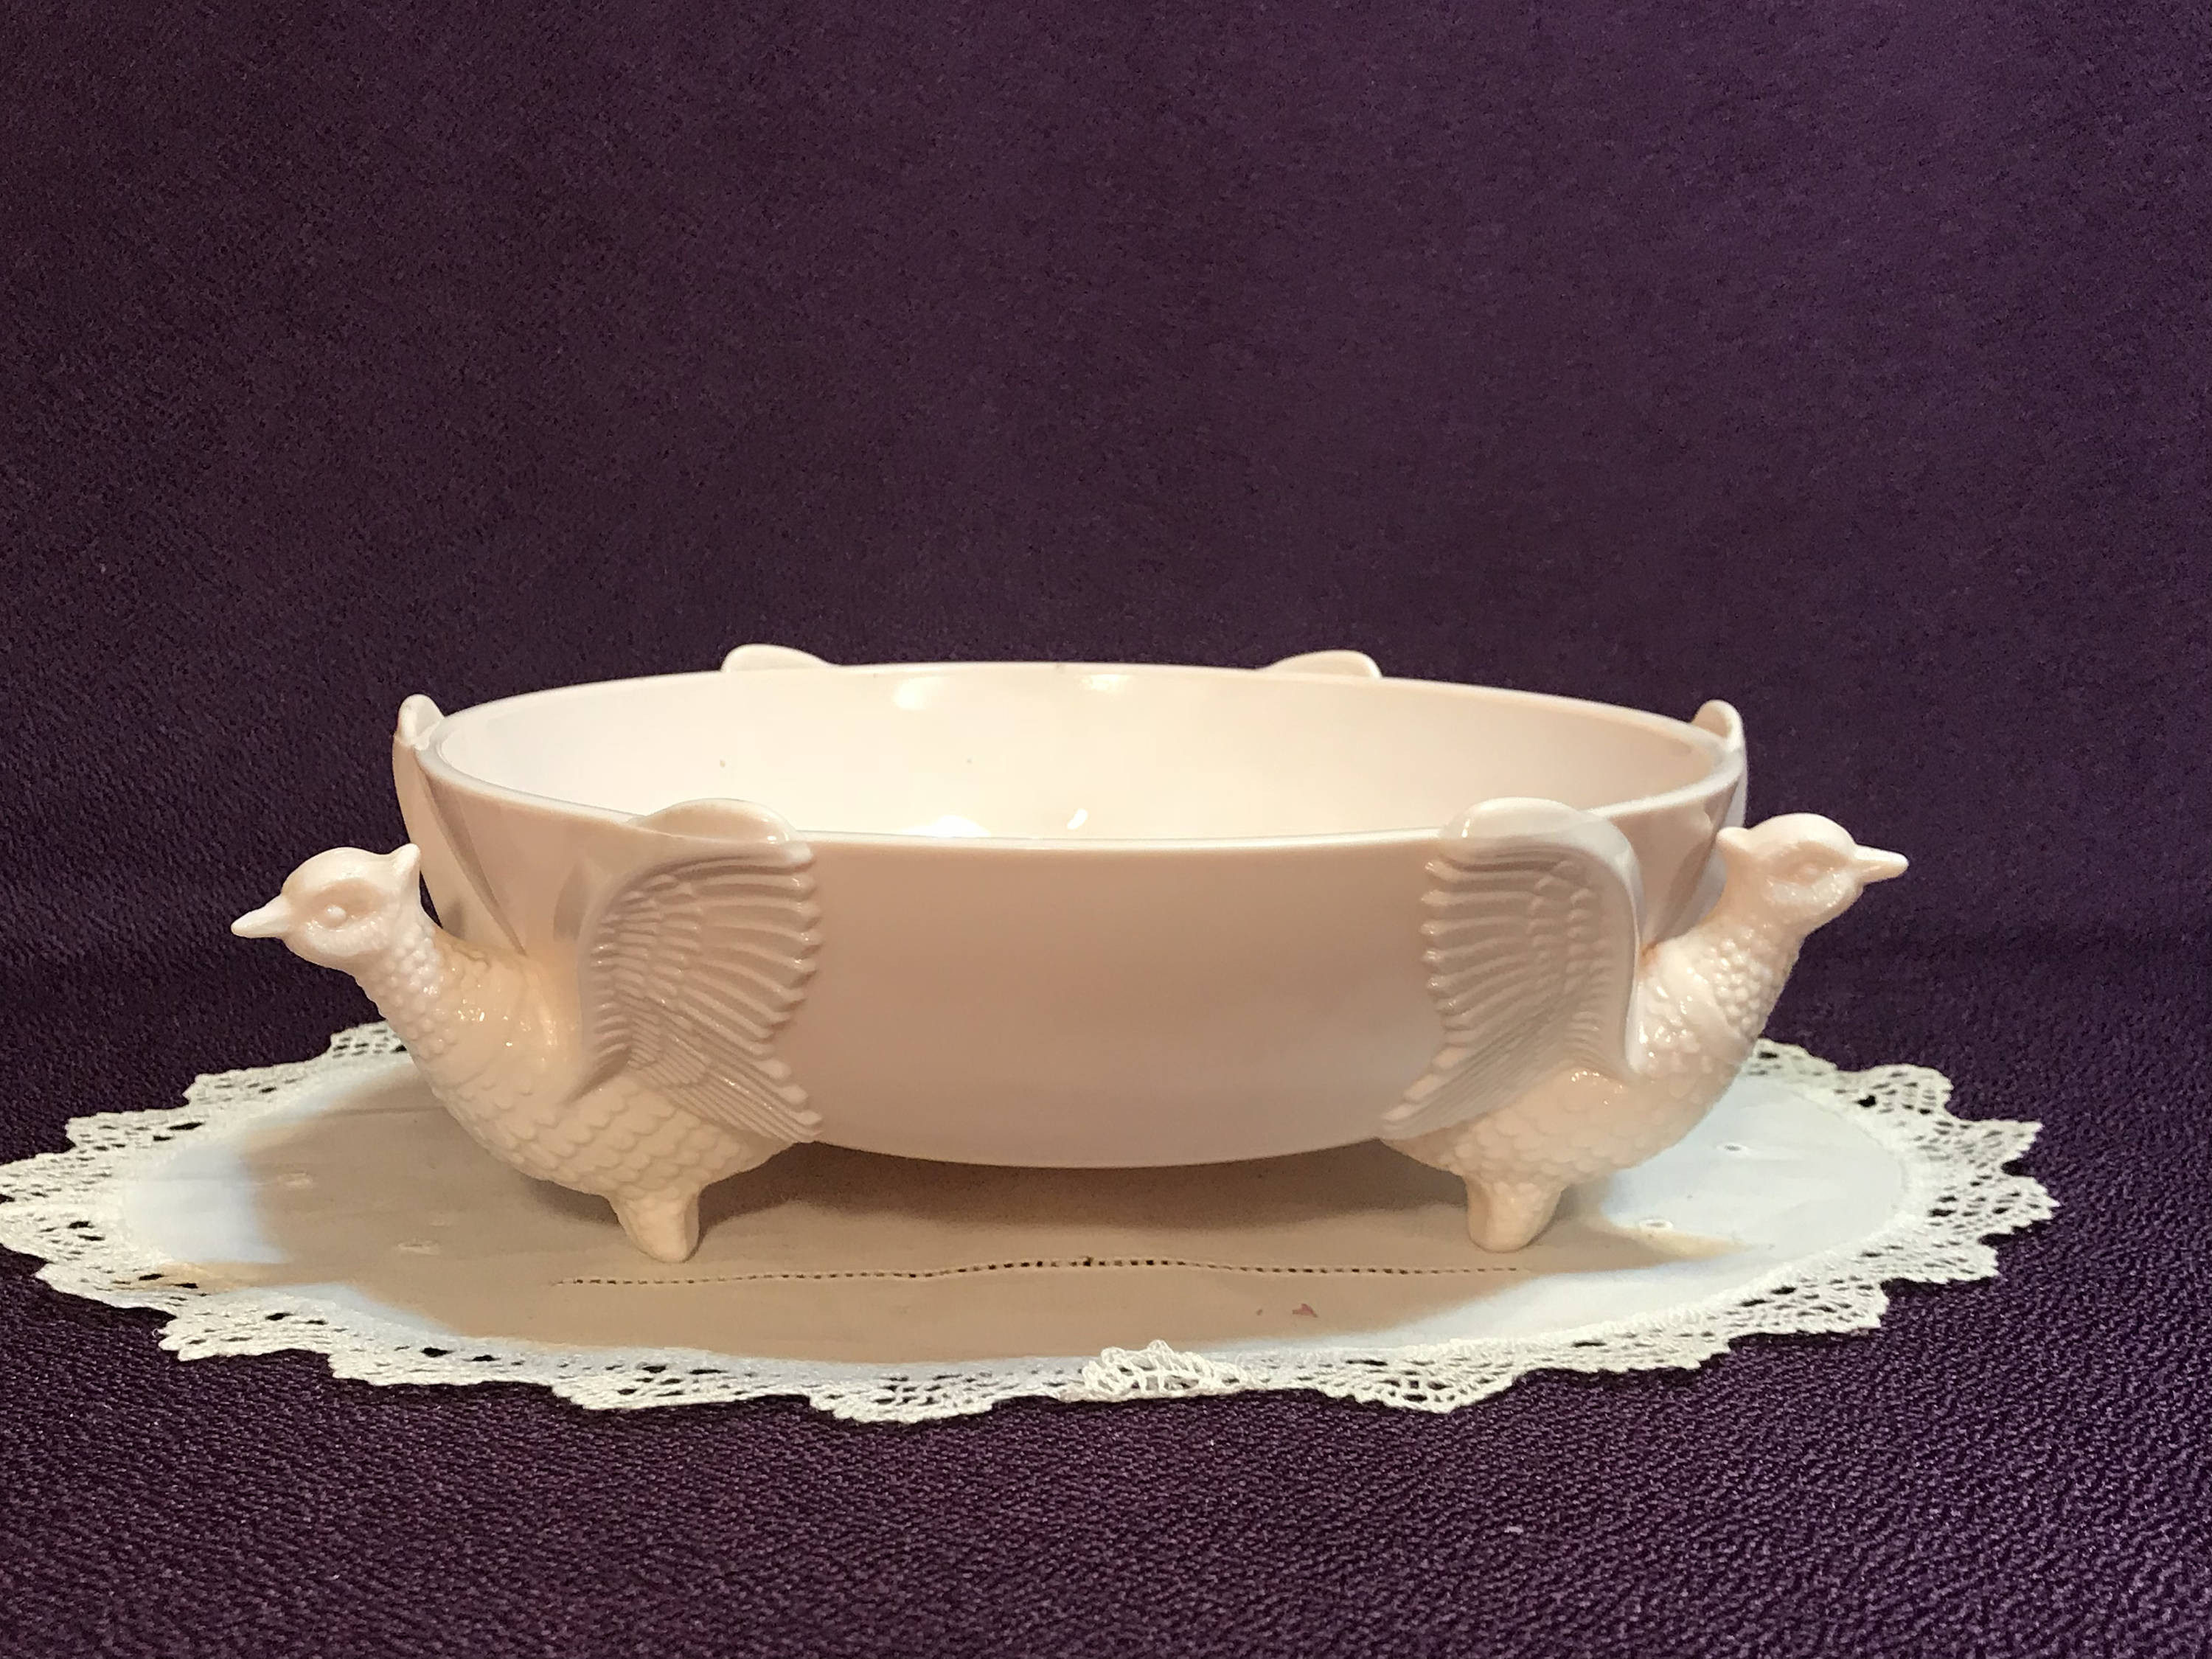 10 Lovable White Ceramic Owl Vase 2024 free download white ceramic owl vase of pink milk glass shell pink pheasant bowl etsy within dc29fc294c28ezoom